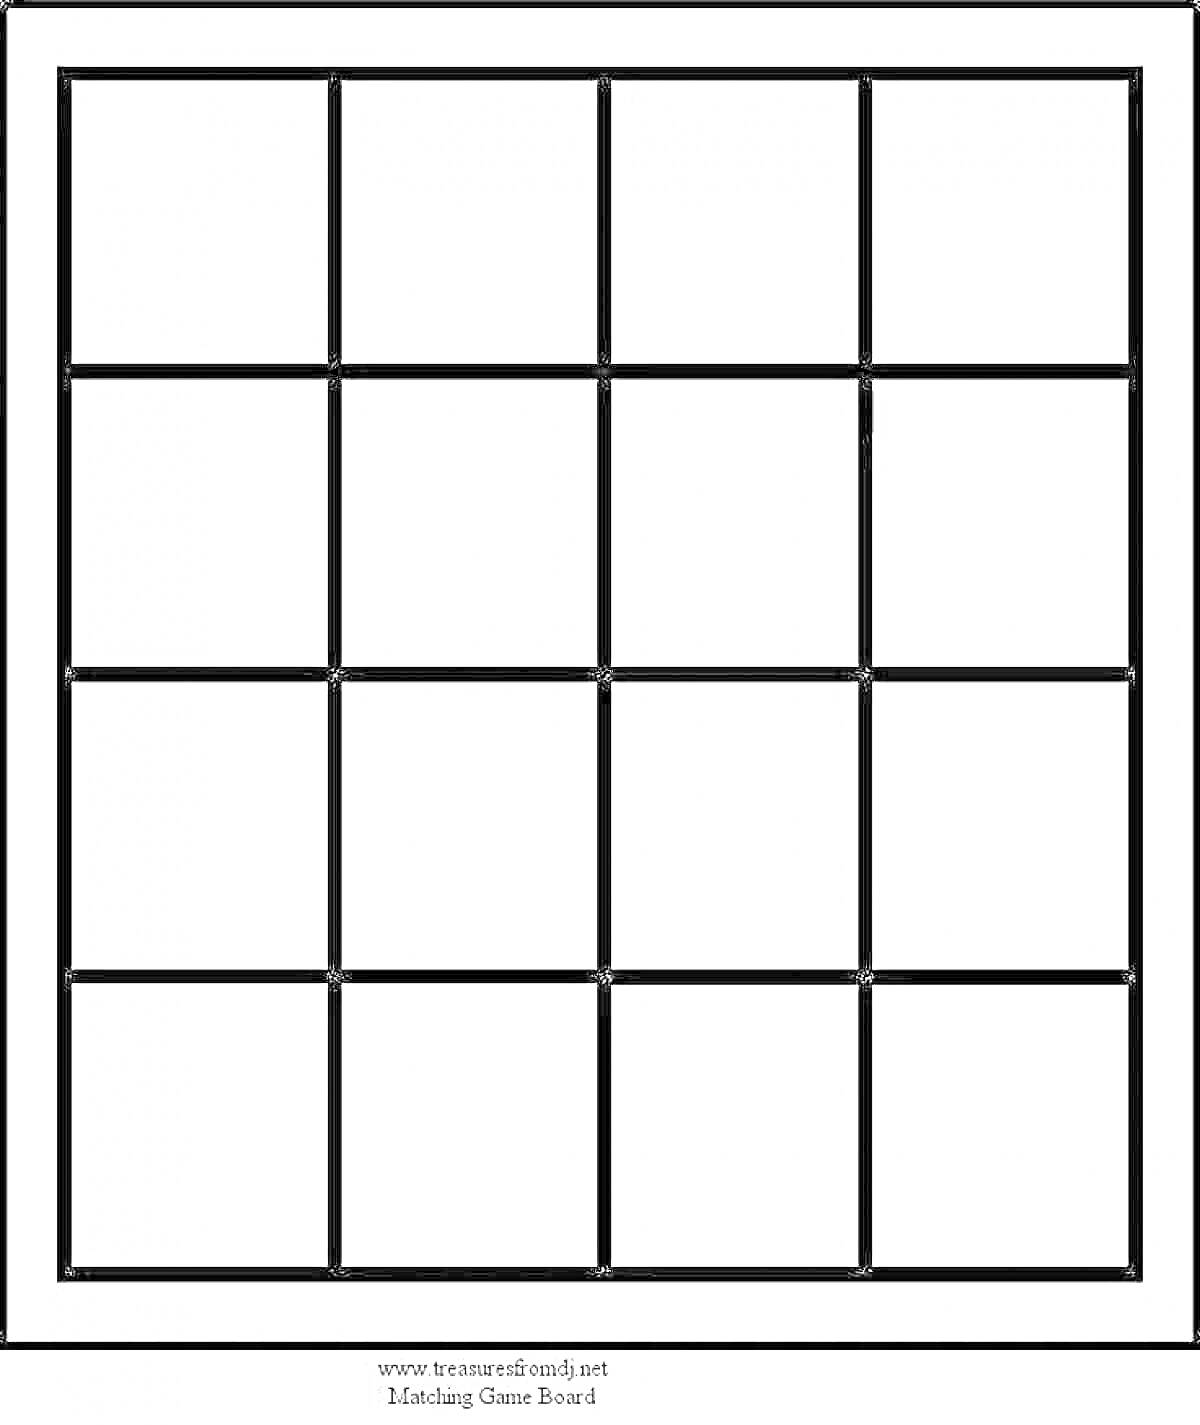 Раскраска Раскраска с квадратами в сетке 4x4